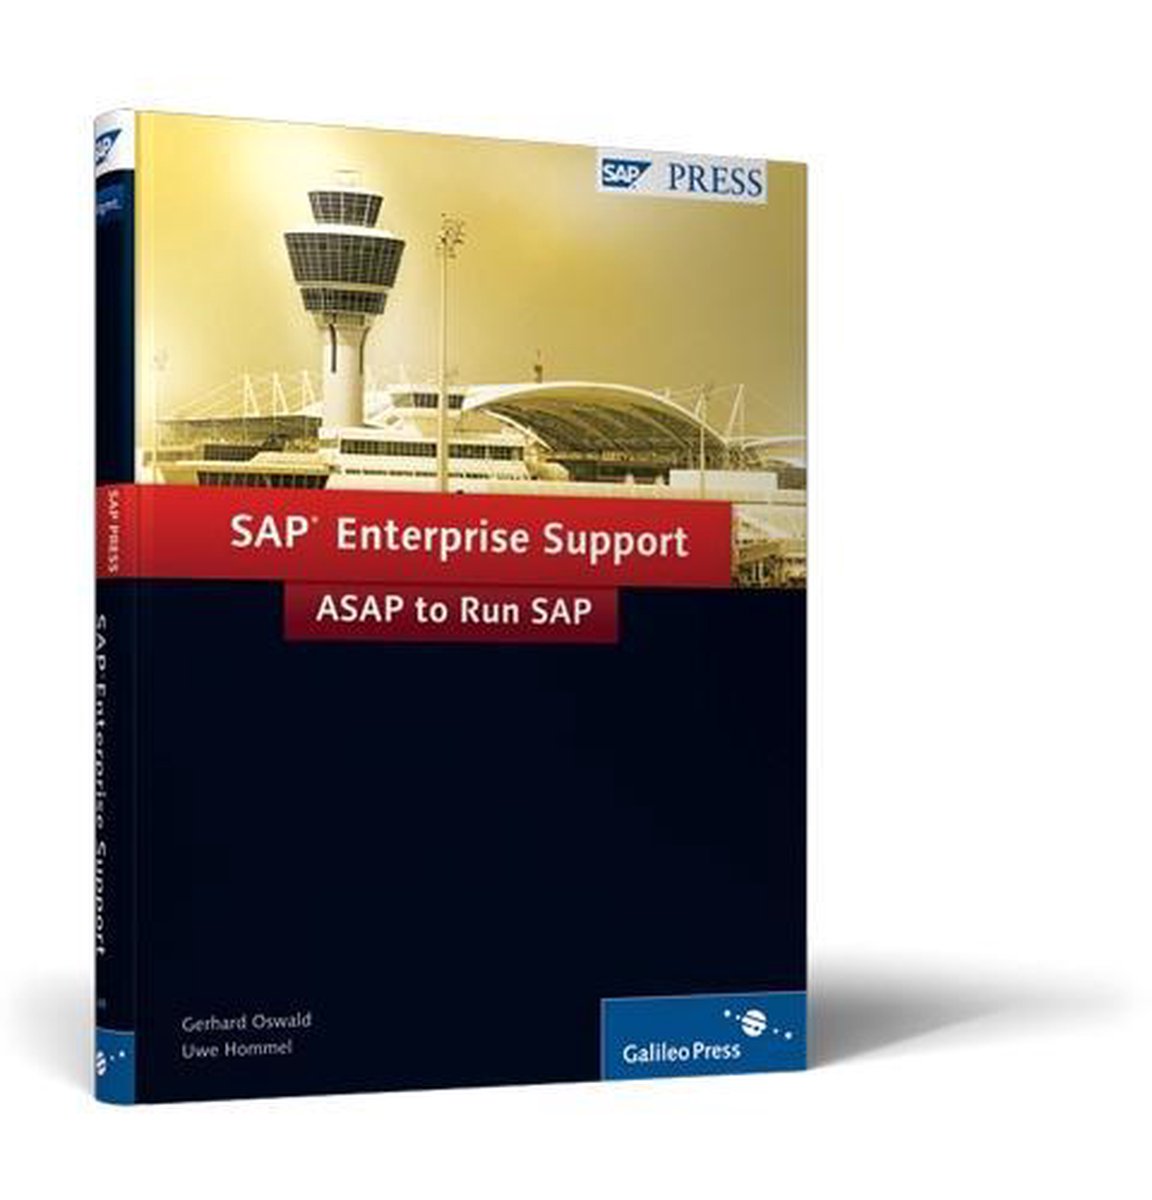 SAP Enterprise Support - ASAP to Run SAP